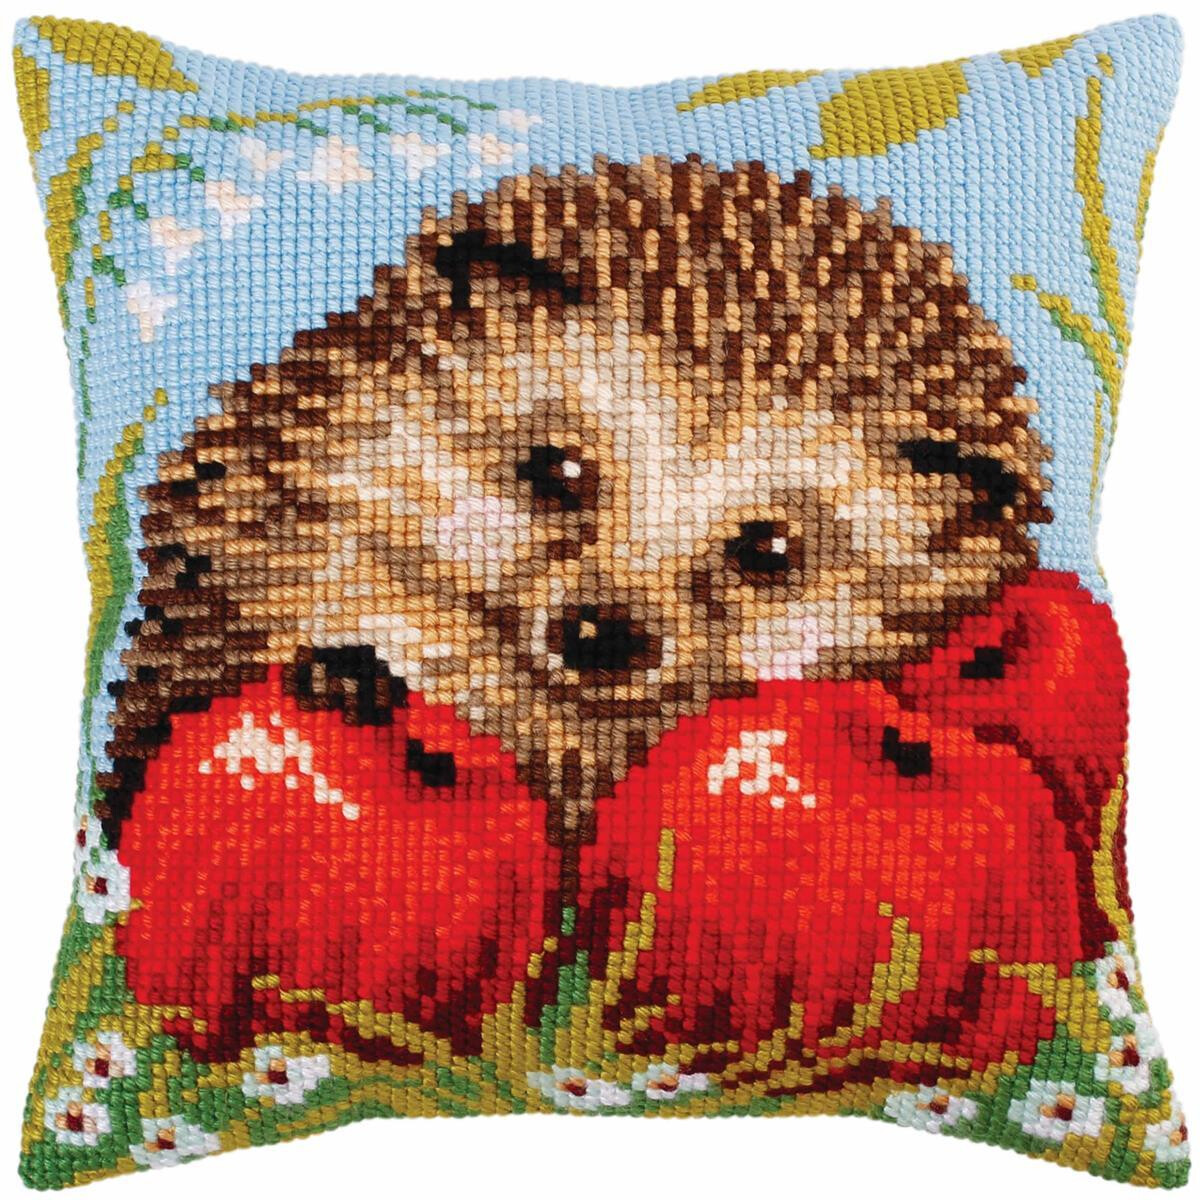 CdA stamped cross stitch kit cushion "Hedgehog with...